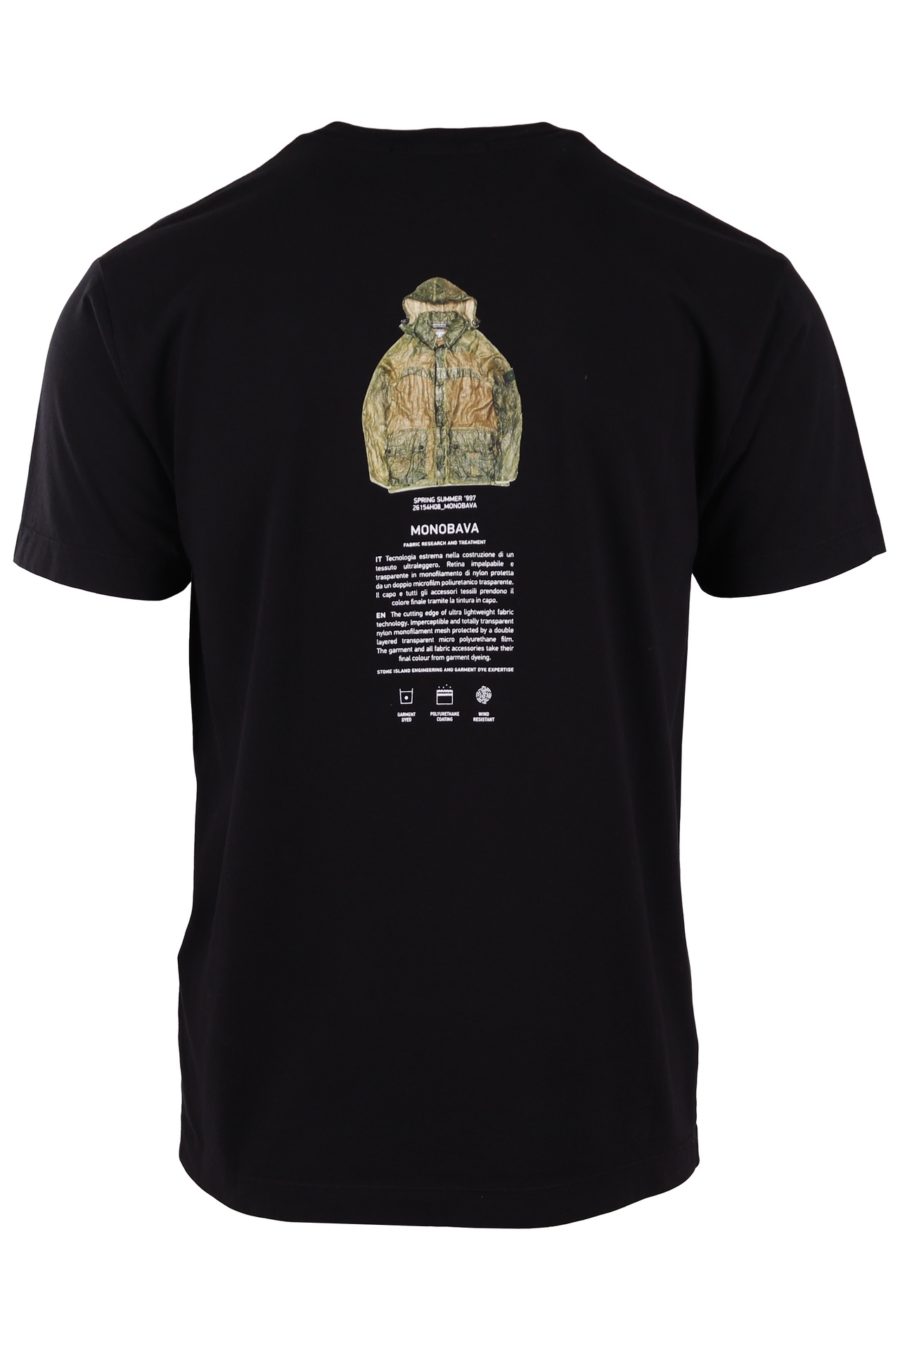 Camiseta Stone Island negra con logo "archivio" - 22d5c84adfa677dabd0422034ff84f27f78f2575